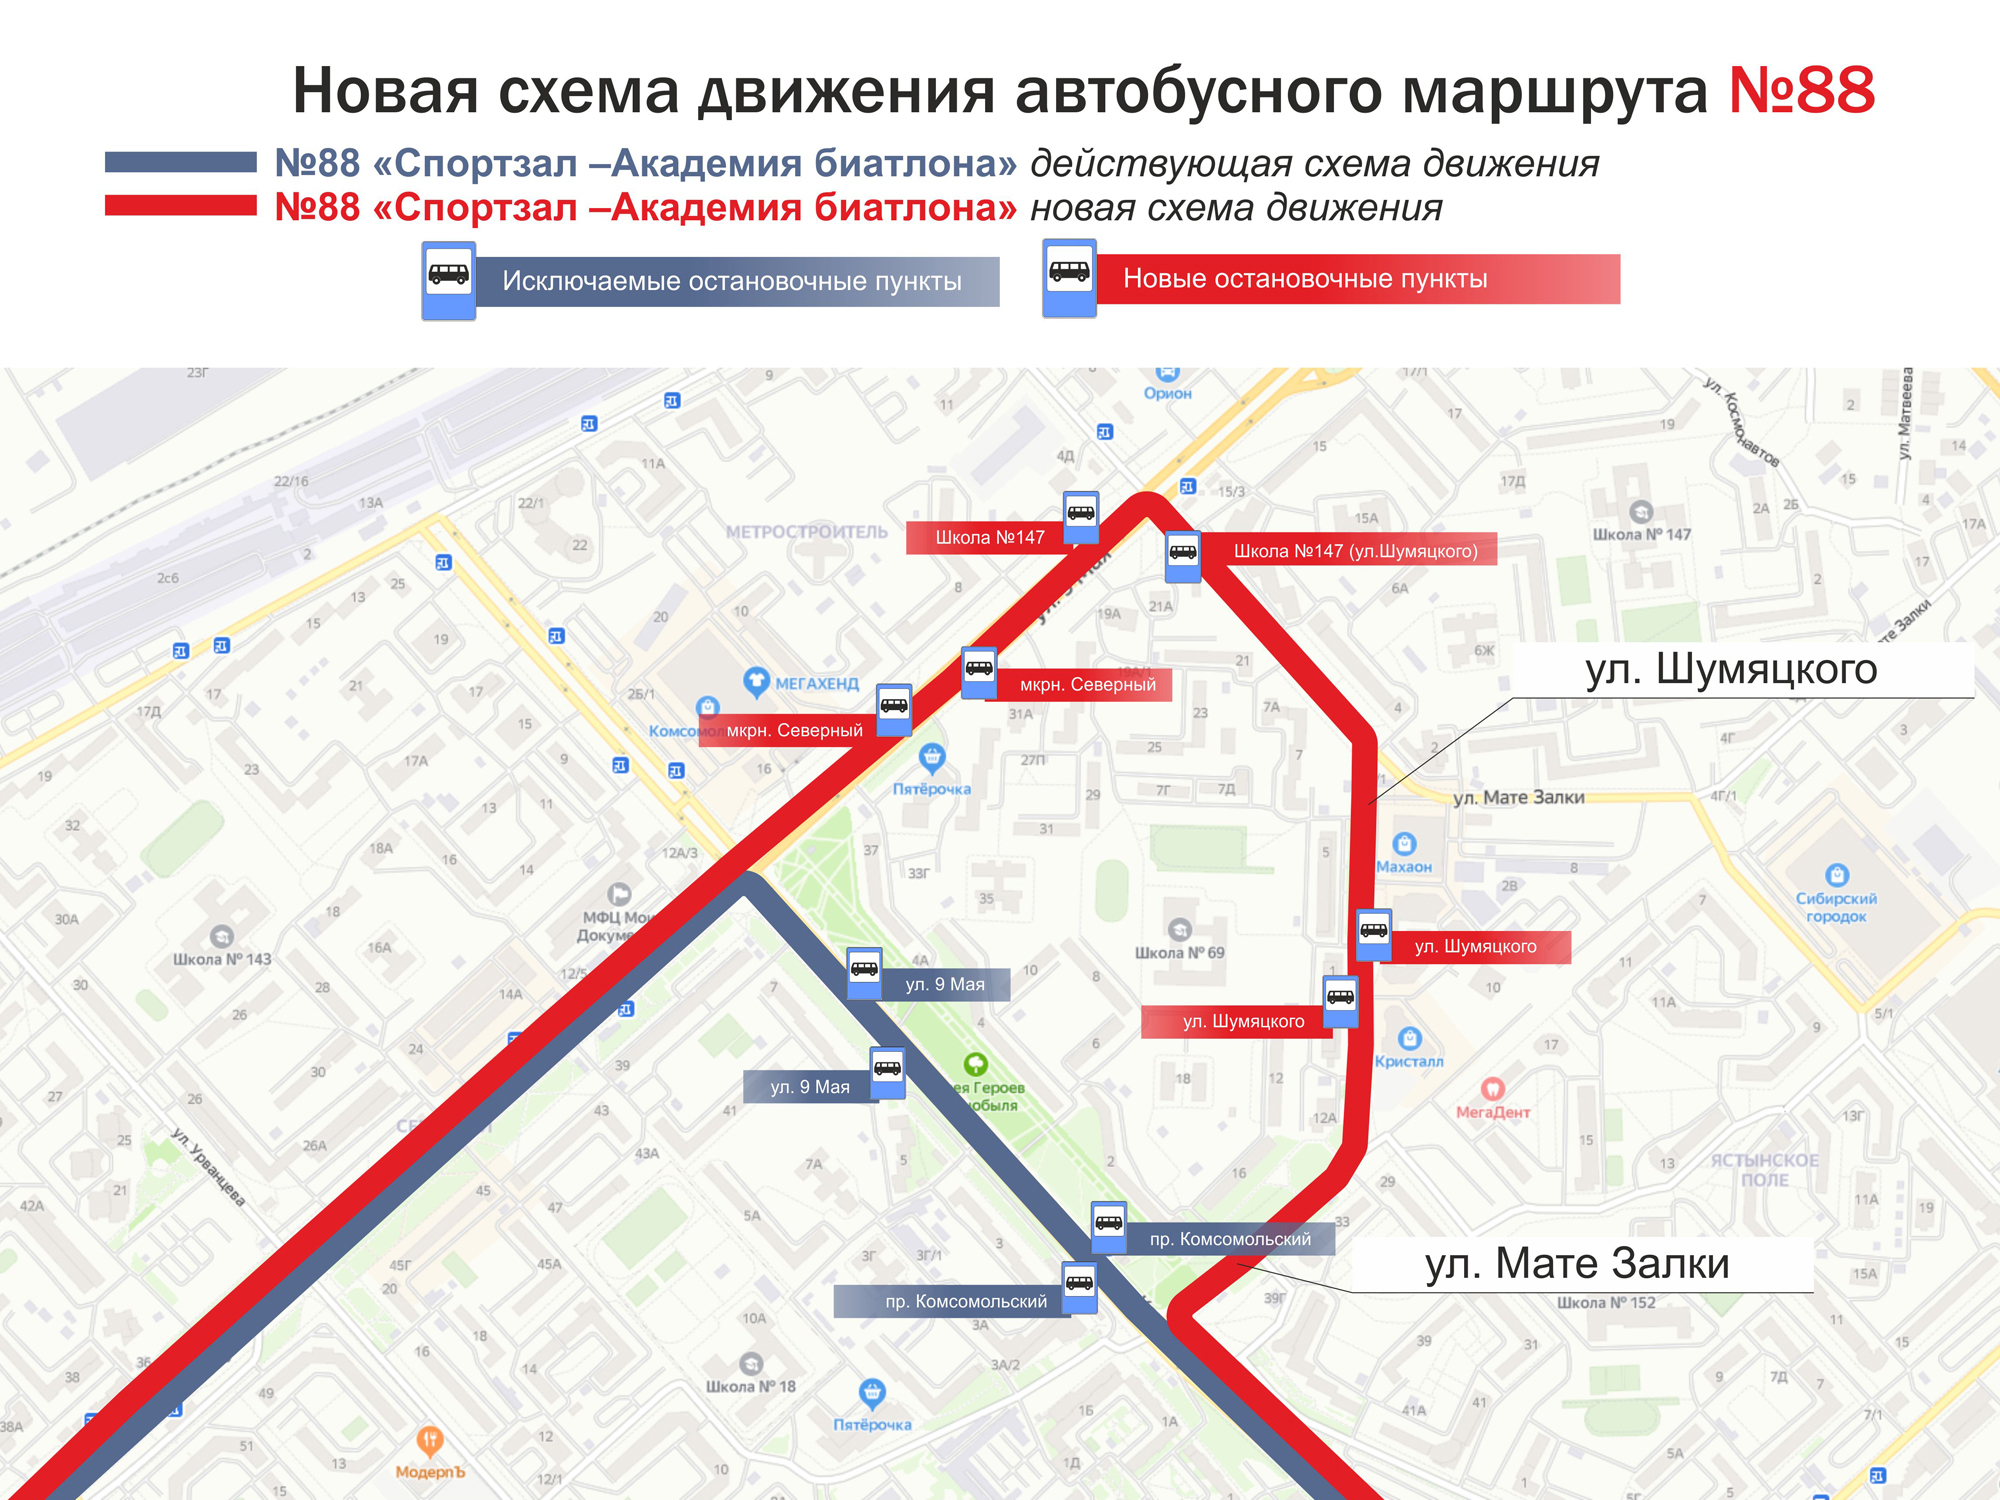 Маршруты м схема. Автобусные маршруты. Схема маршрута. Маршрутка 88. Схема движения автобусов в Красноярске.